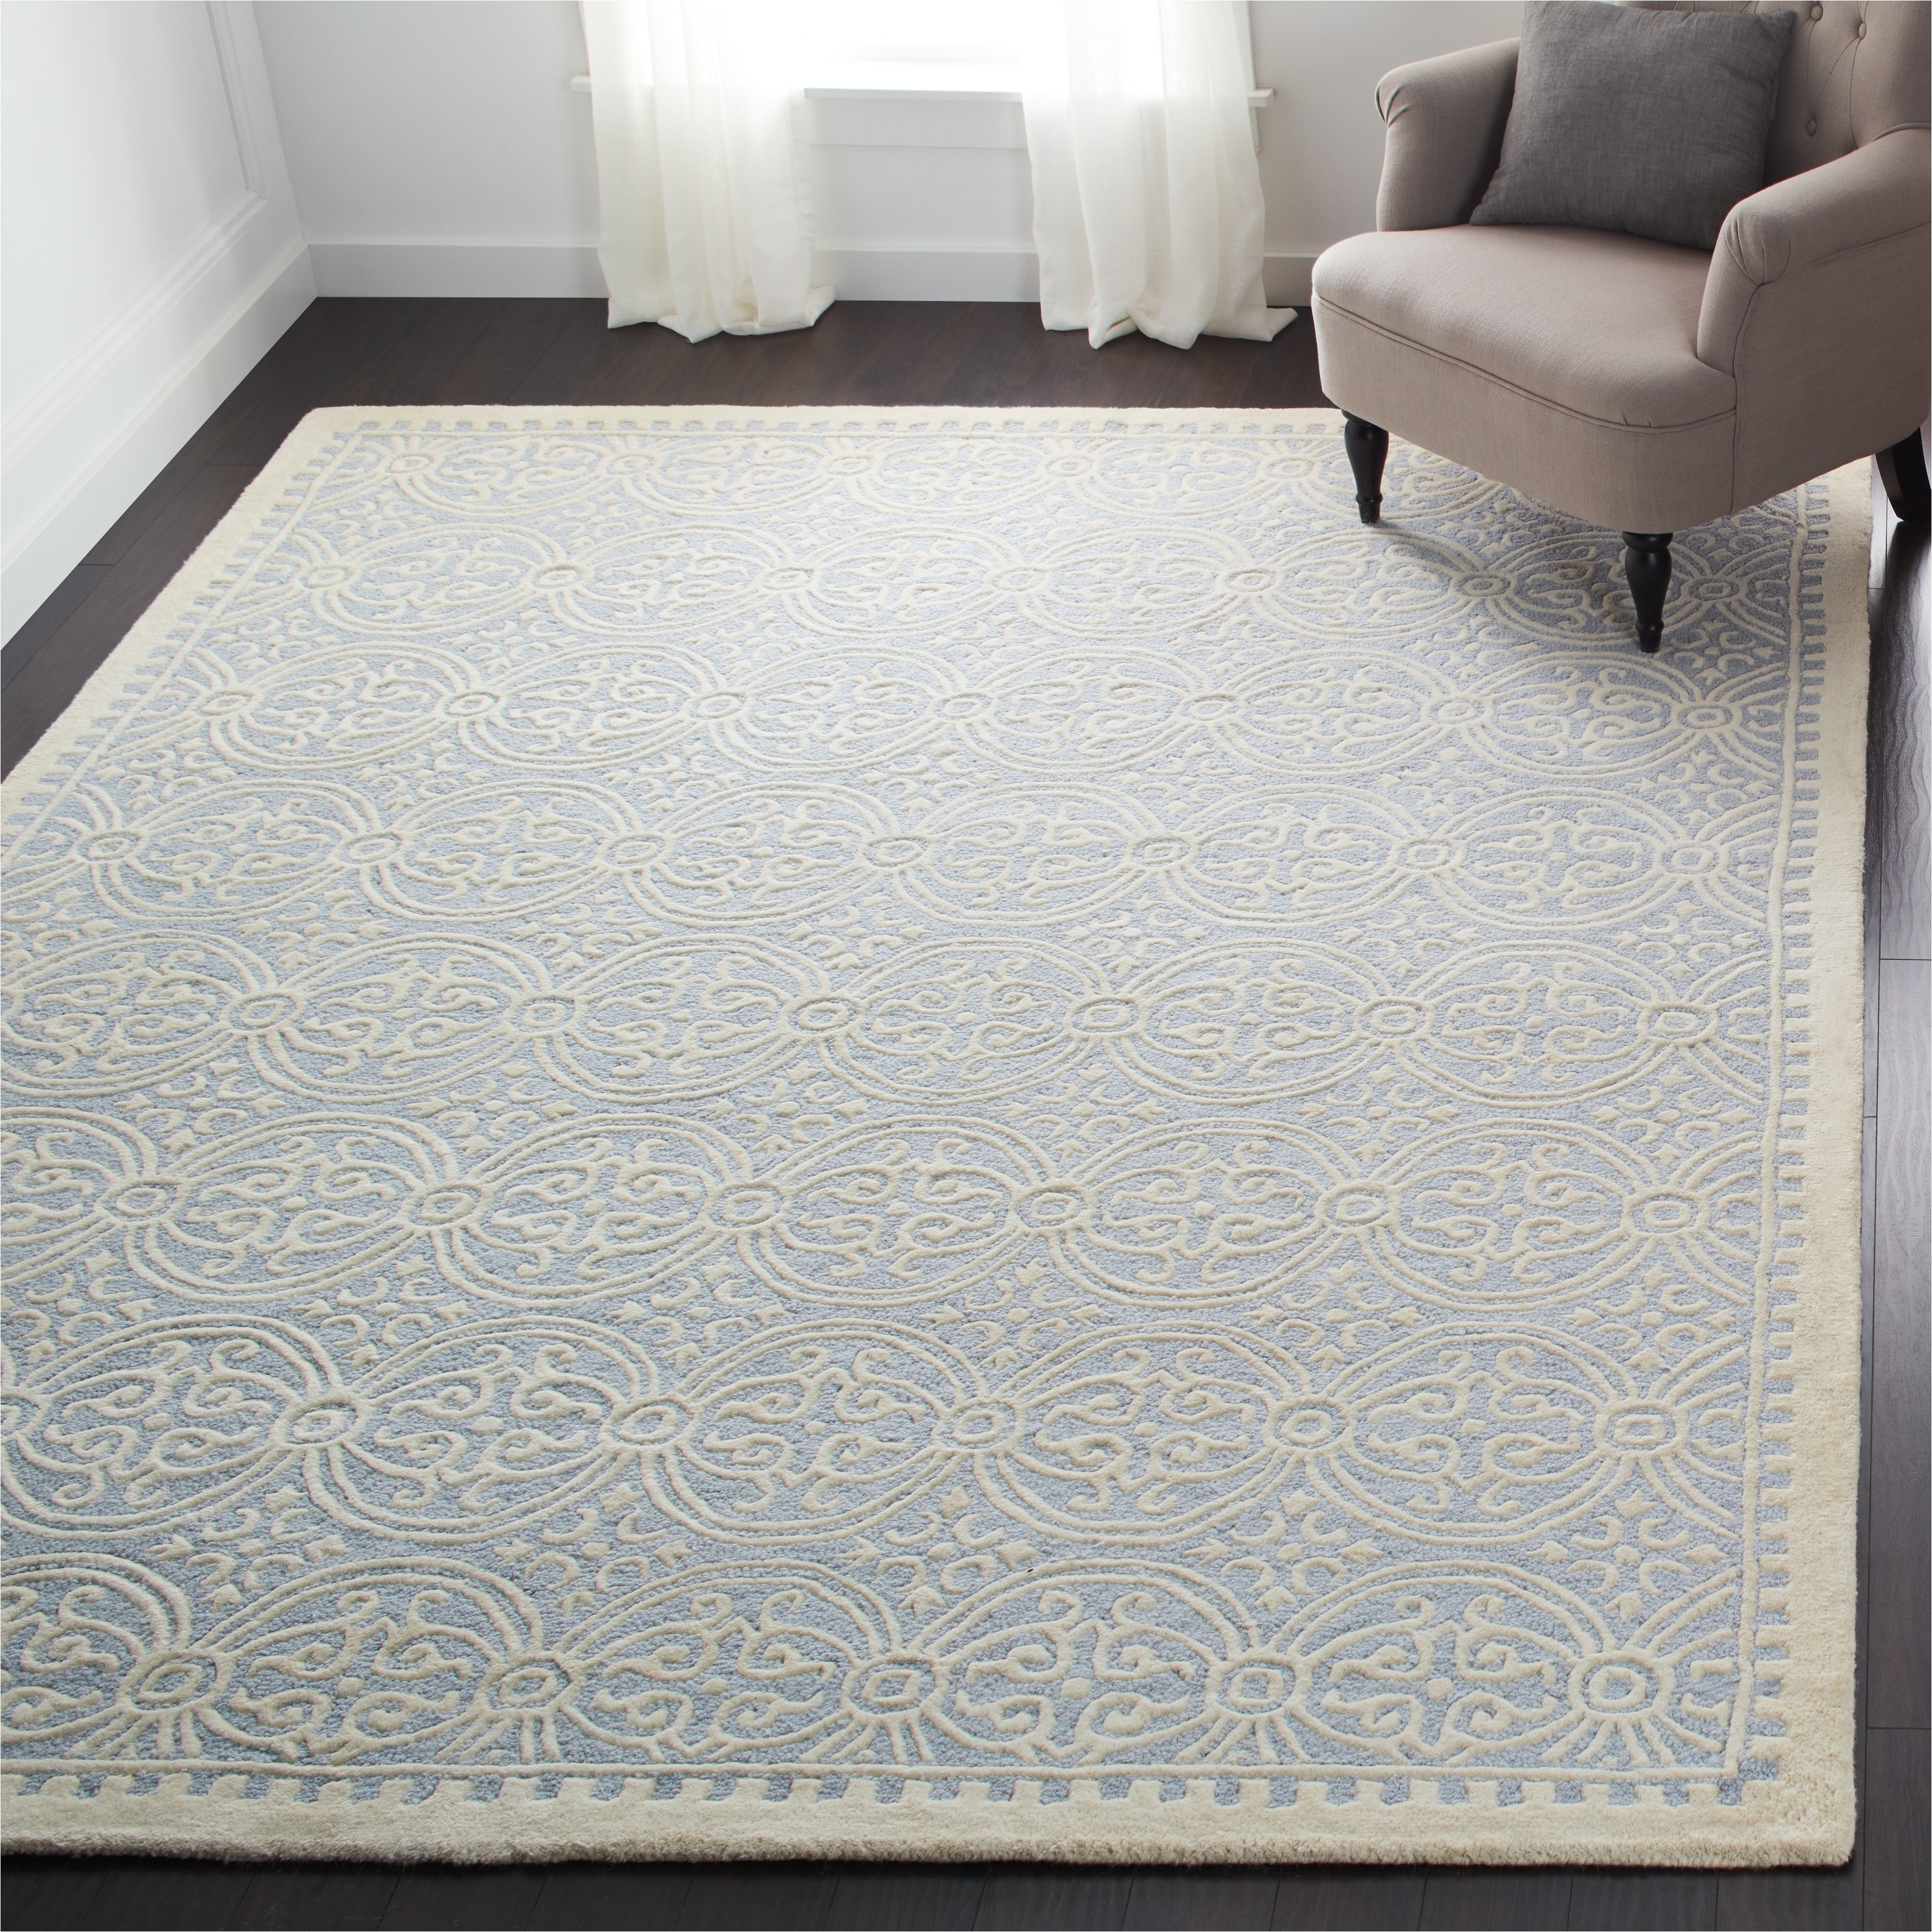 shop safavieh handmade moroccan cambridge light blue wool area rug on sale free shipping on orders over 45 overstock com 7530636